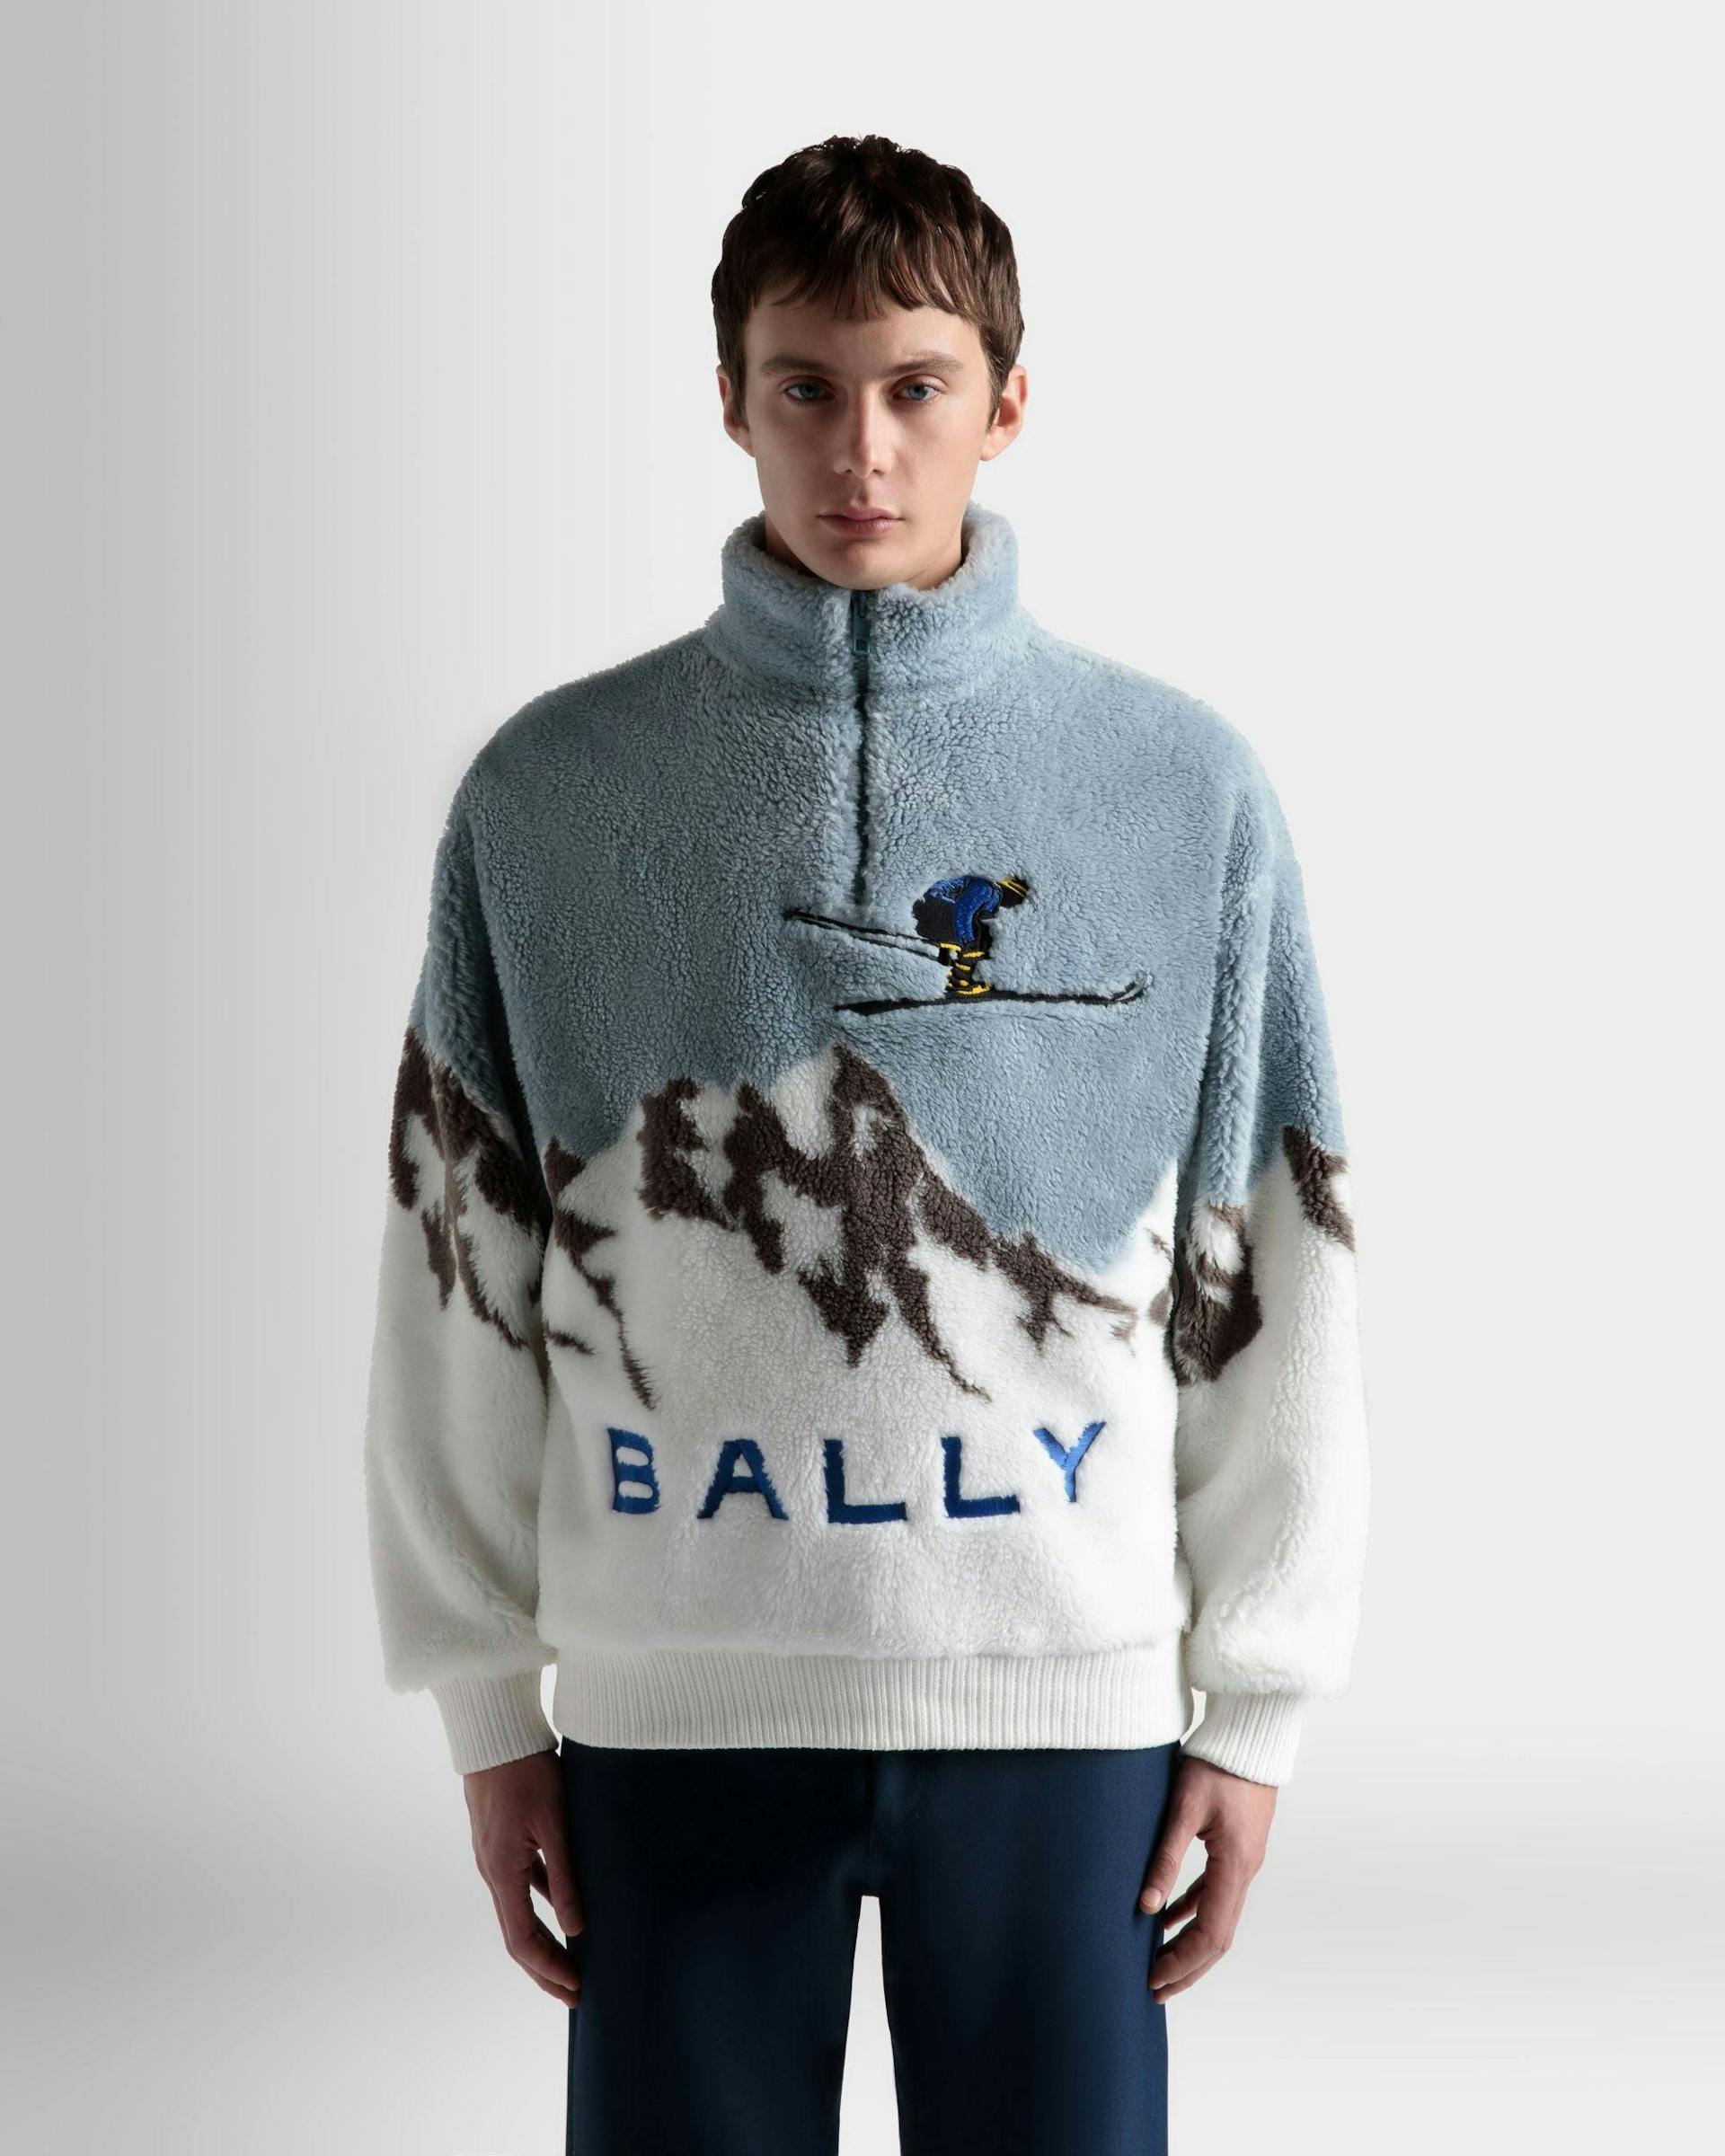 Men's Sweatshirt In Light Blue And White Sherpa Fleece | Bally | On Model Close Up